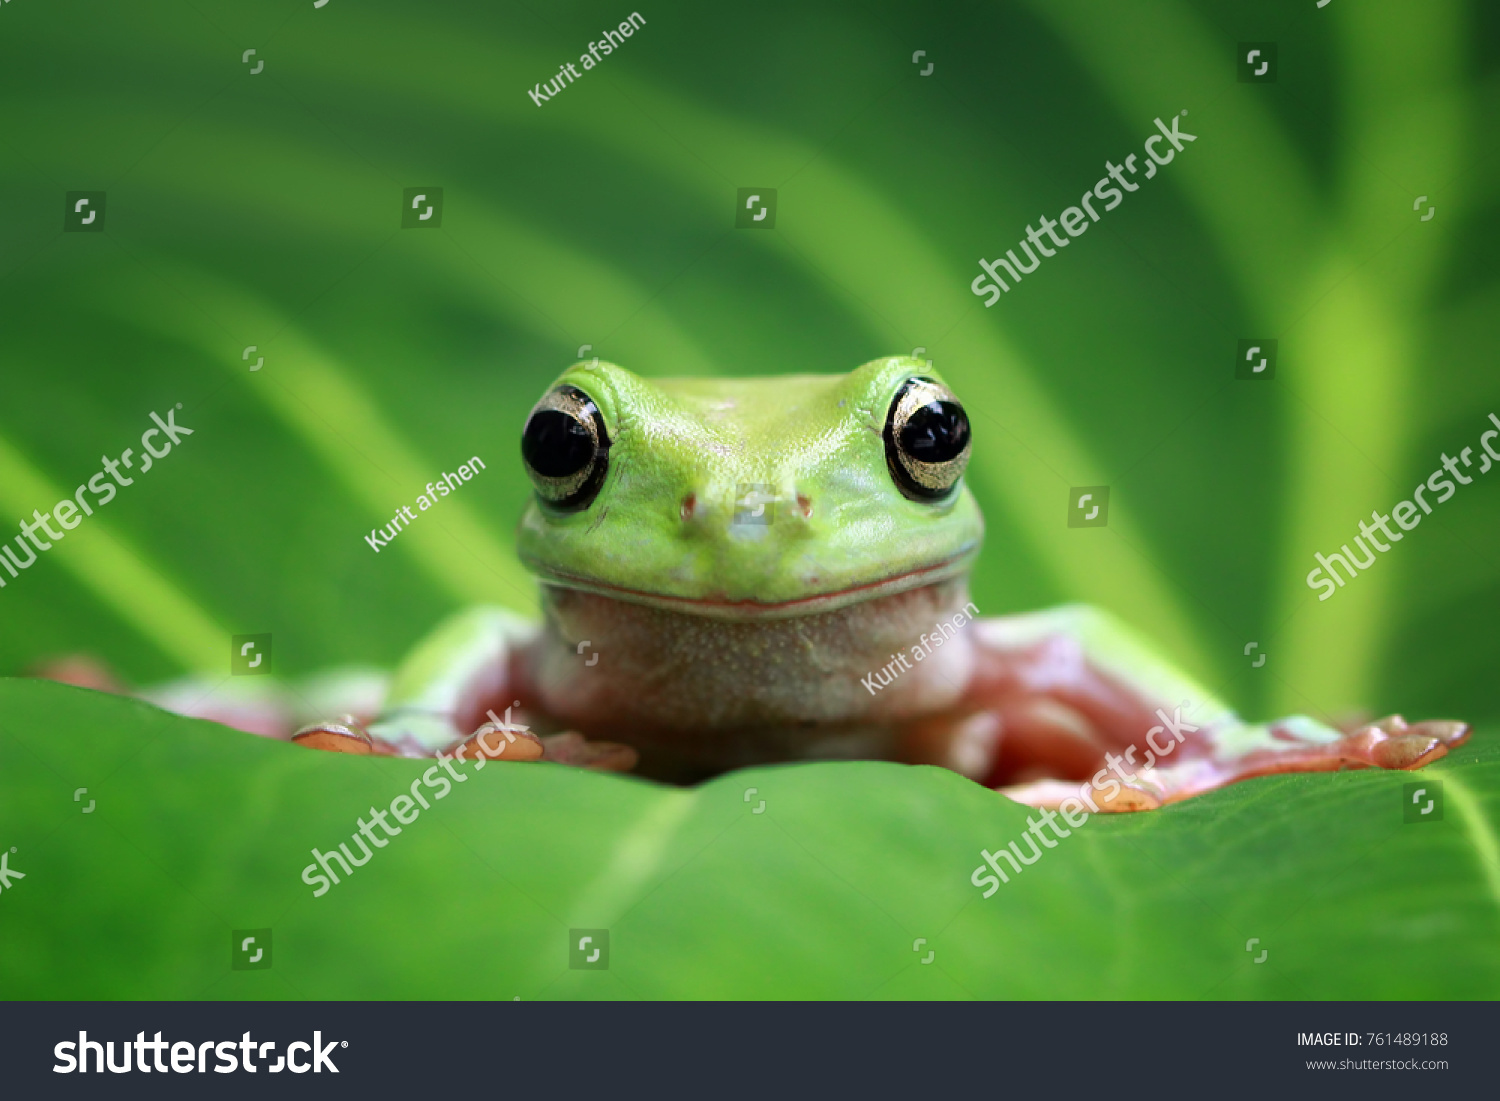 Dumpy frog "litoria caerulea" on green leaves, dumpy frog on branch, Green tree frog on leaves, Whites tree frog closeup #761489188